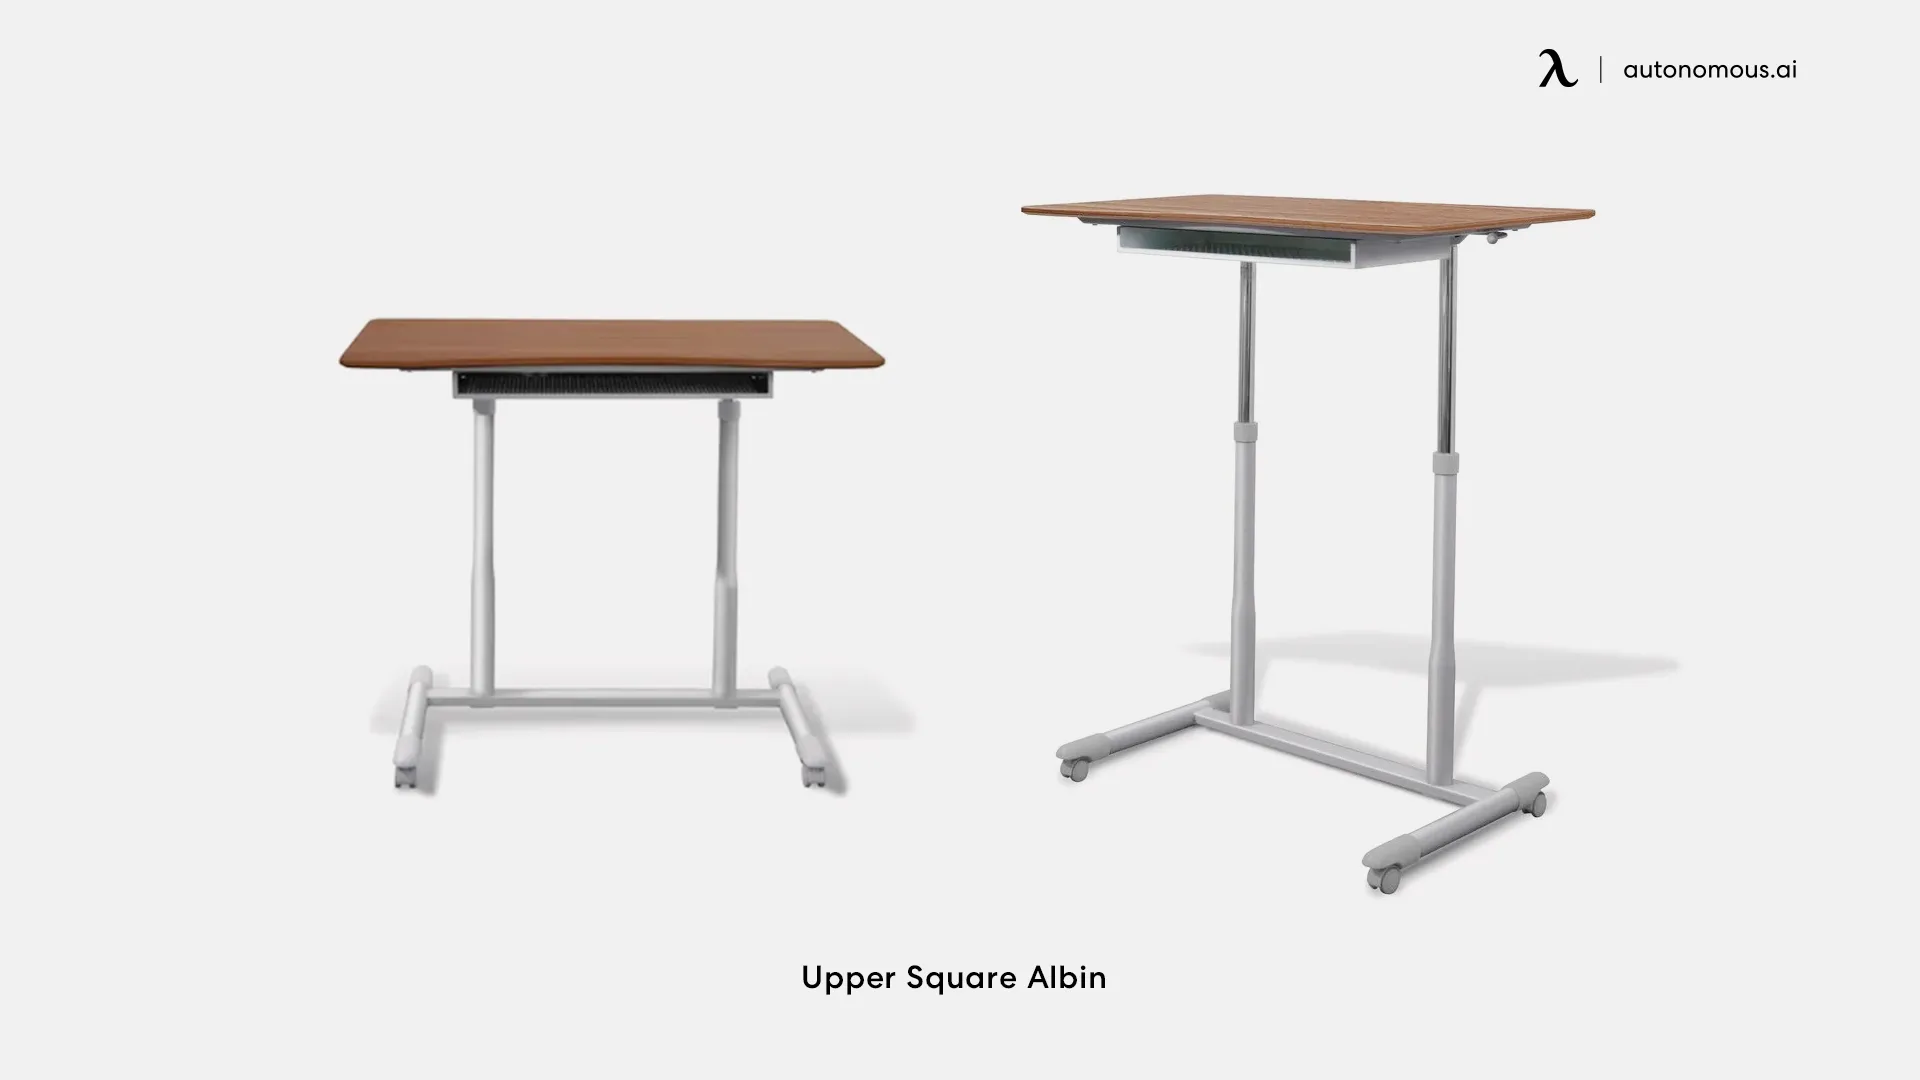 Upper Square Albin space-saving desk